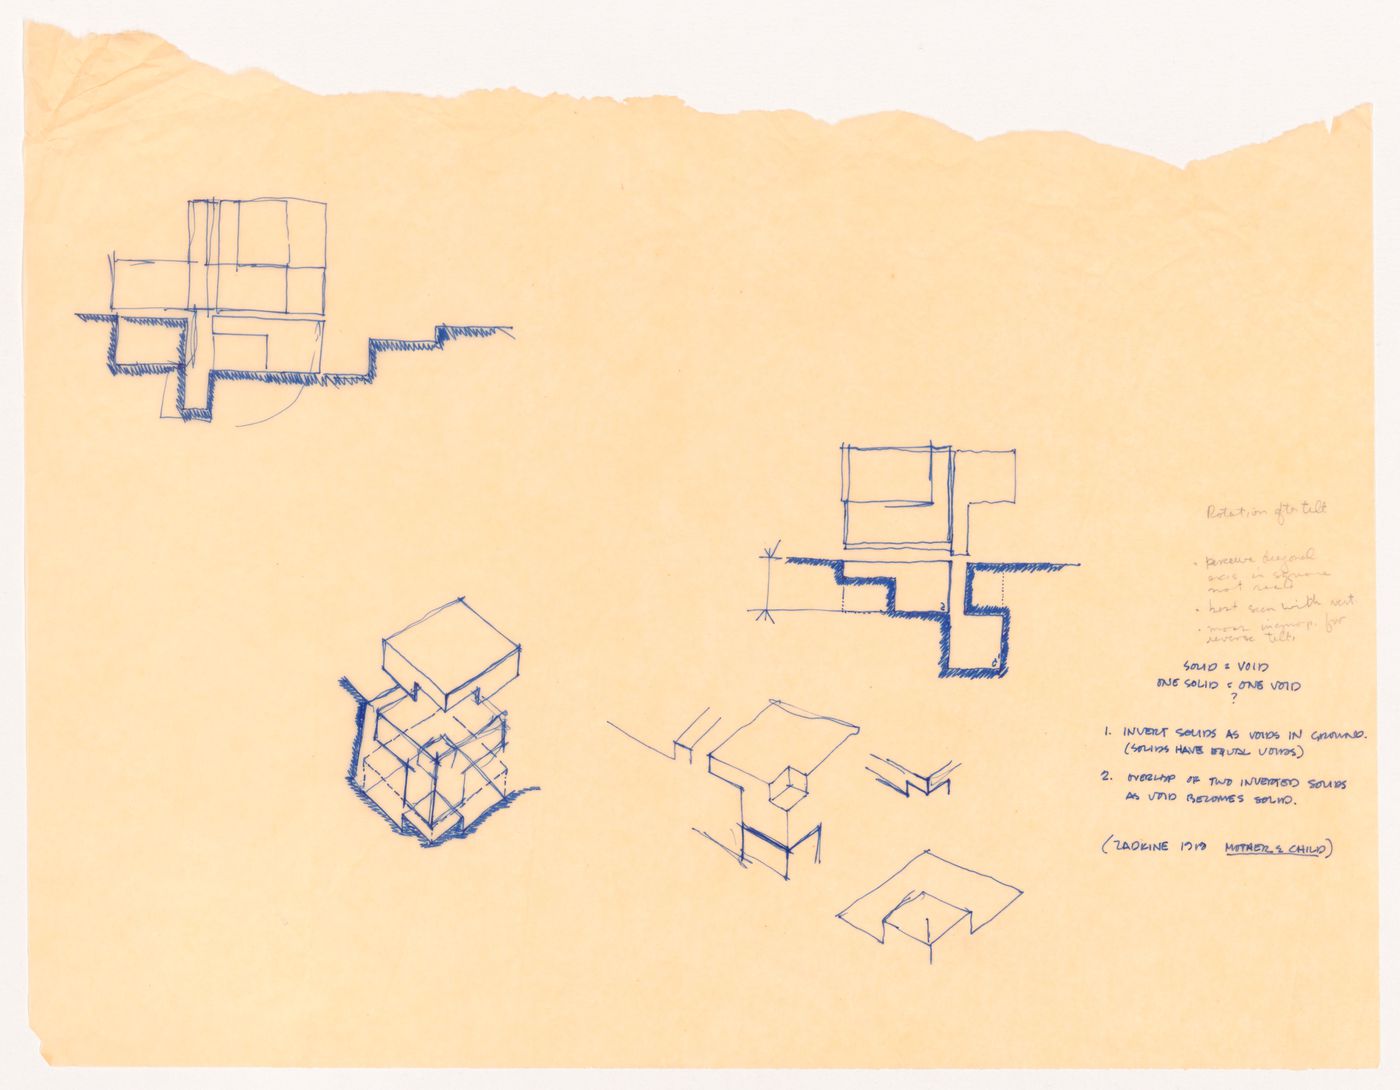 Sketch plans, axonometrics and notes for House 11a, Palo Alto, California